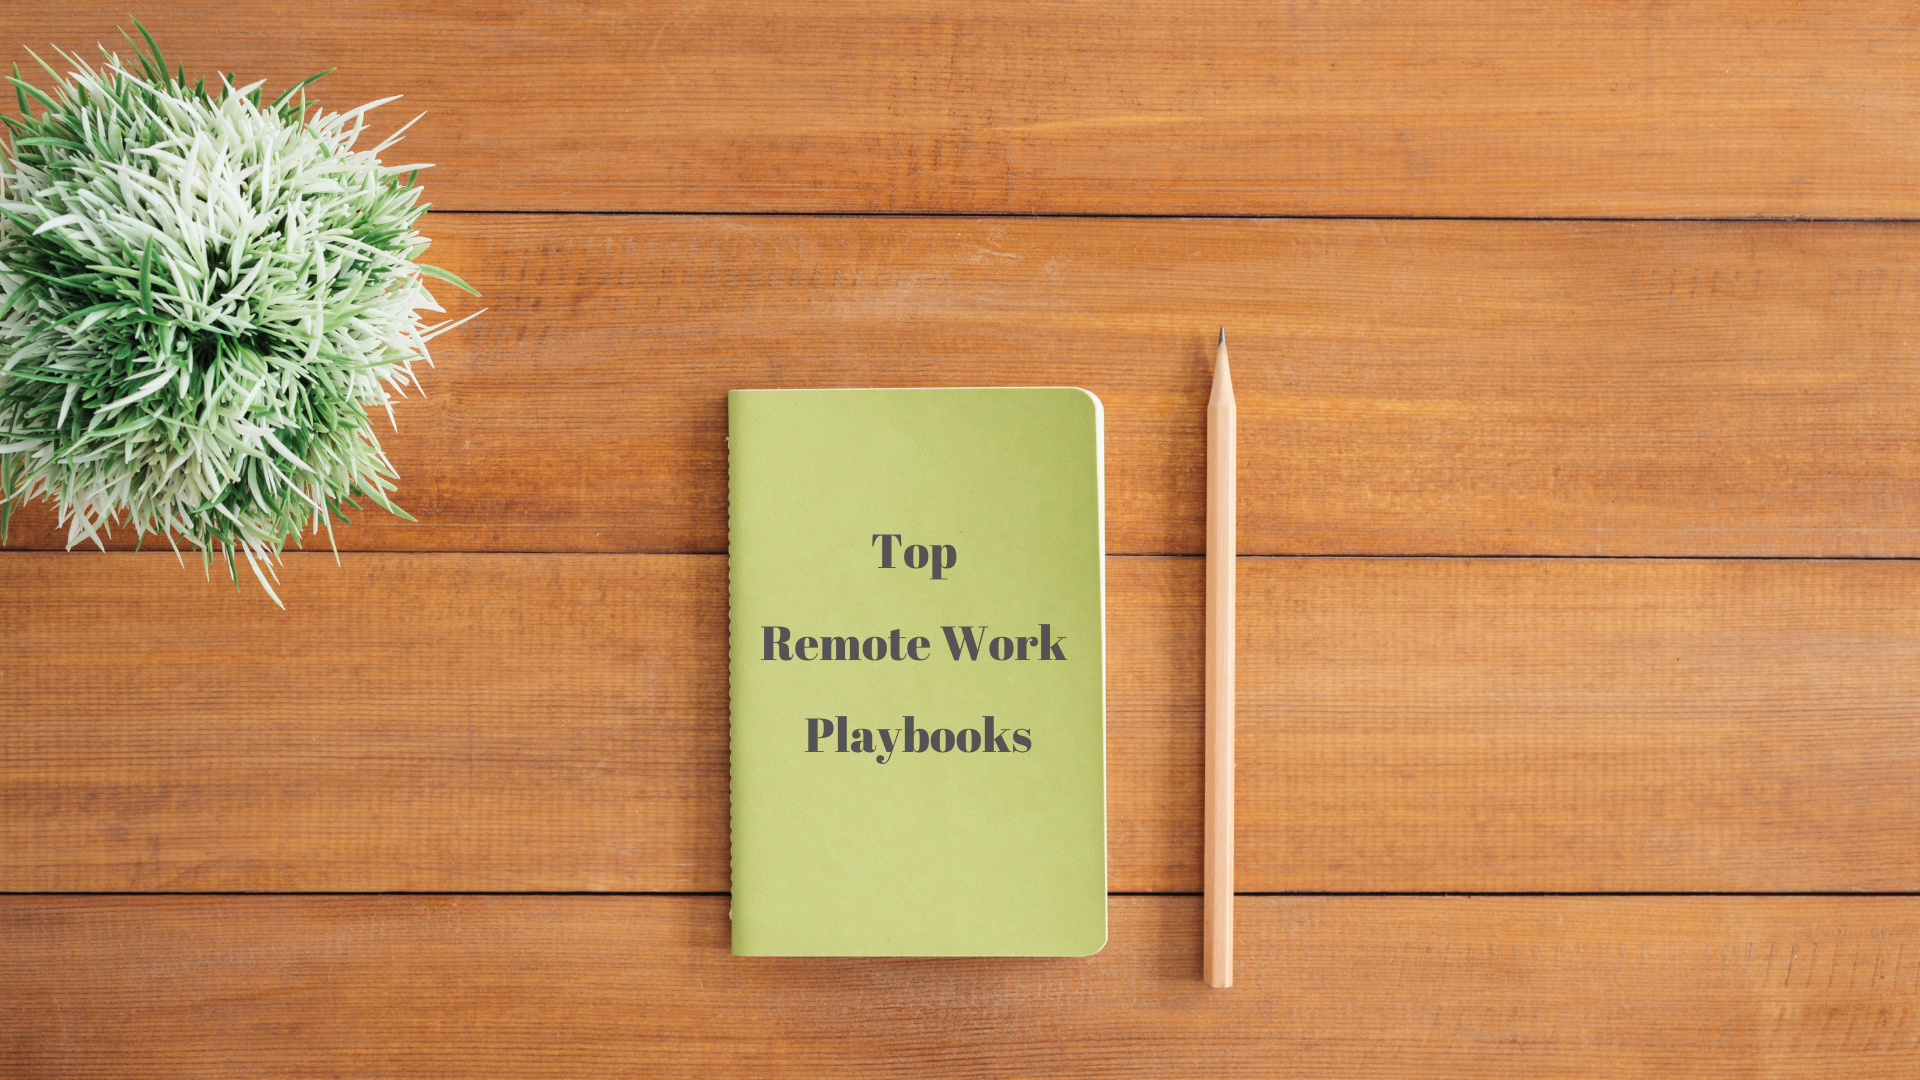 Top remote work playbooks